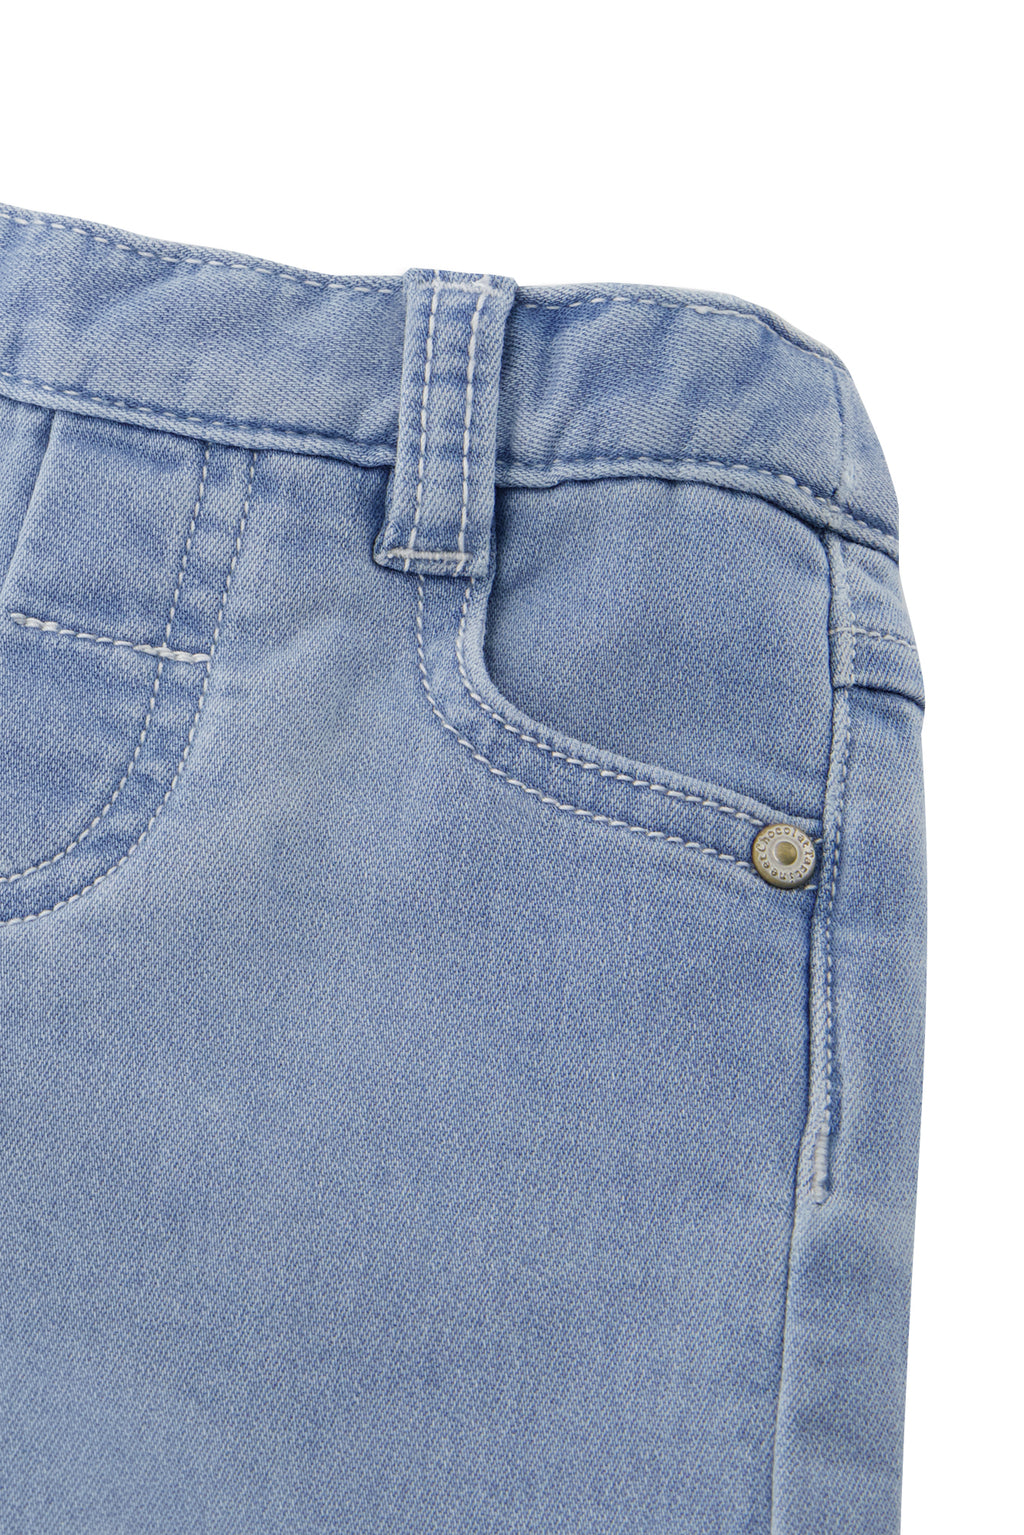 Jeans - Hellblau Strickwaren gemischt